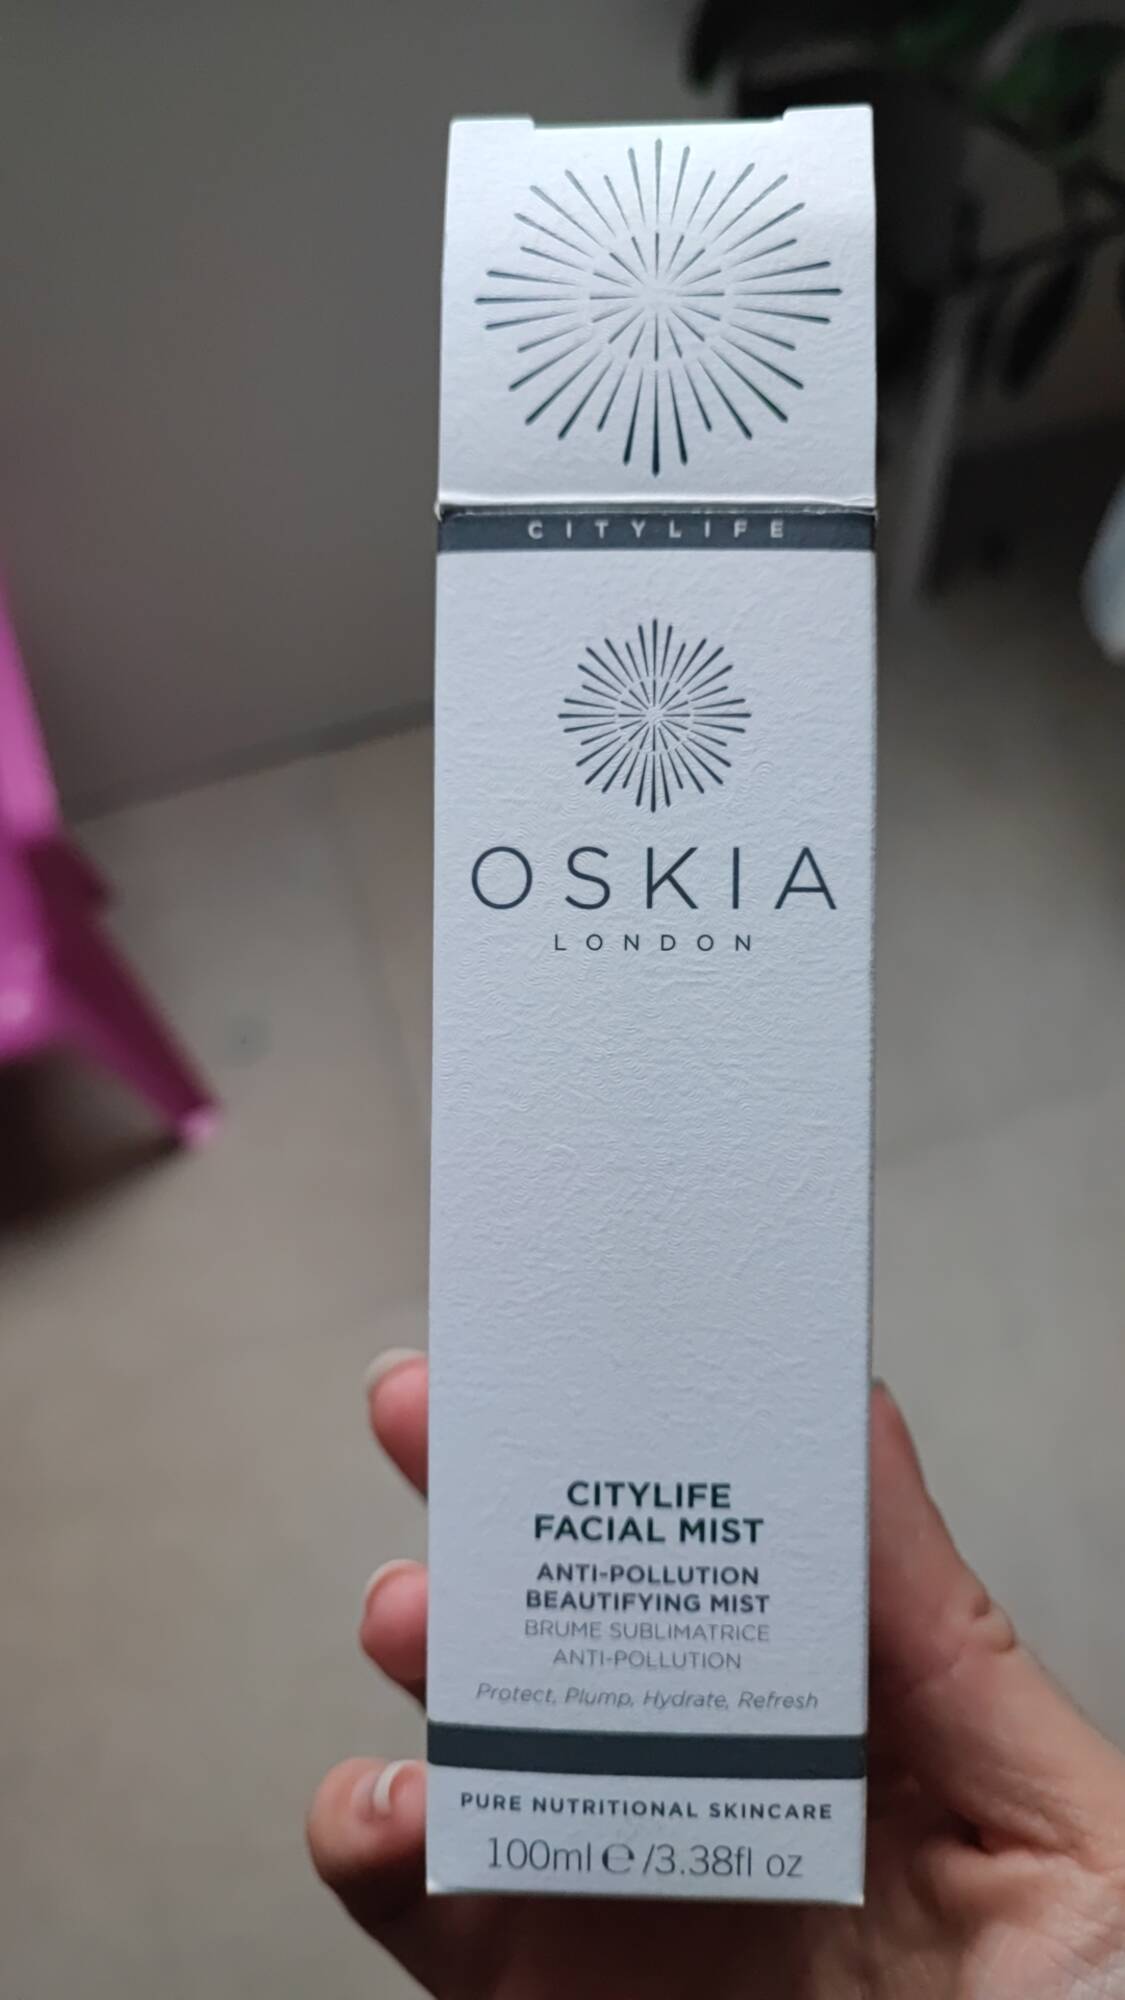 OSKIA - Citylife facial mist - Brume sublimatrice anti-pollution